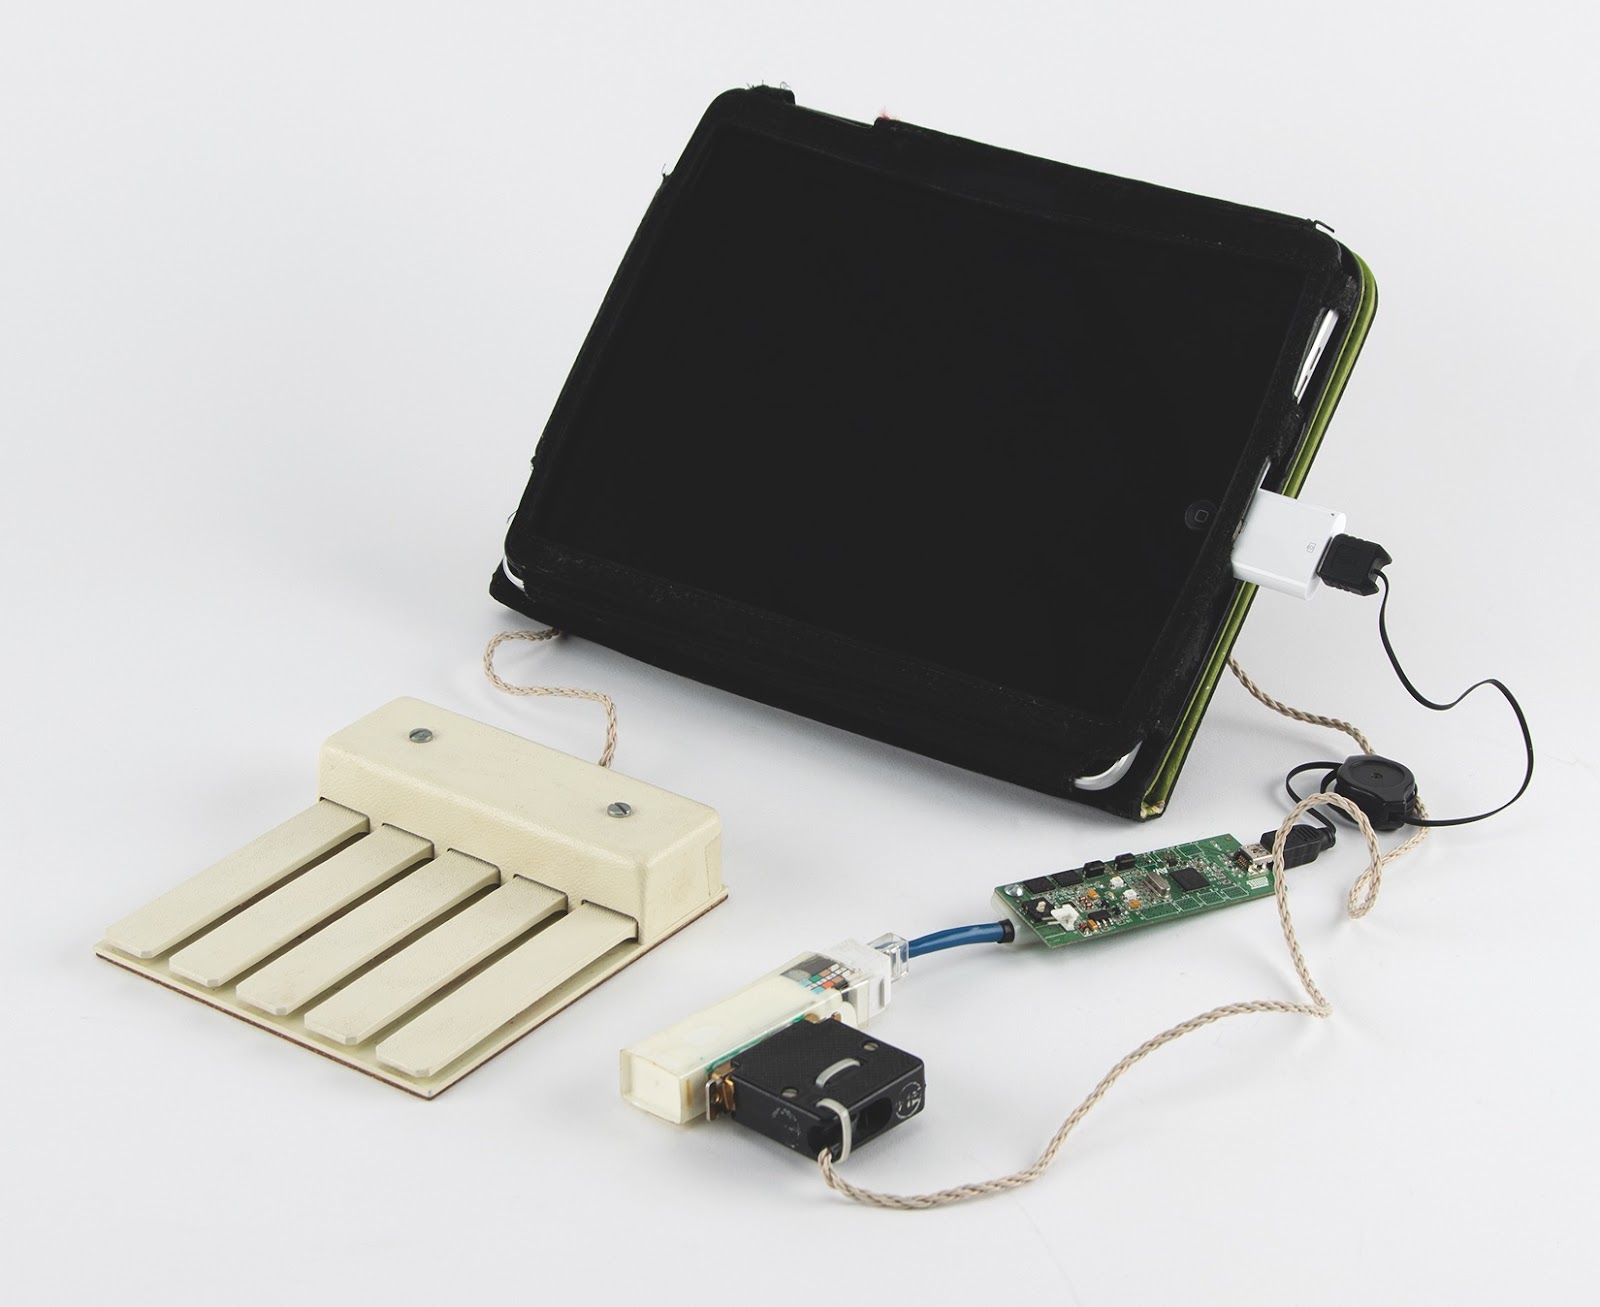 Douglas Engelbart coding keyset with iPad interface.